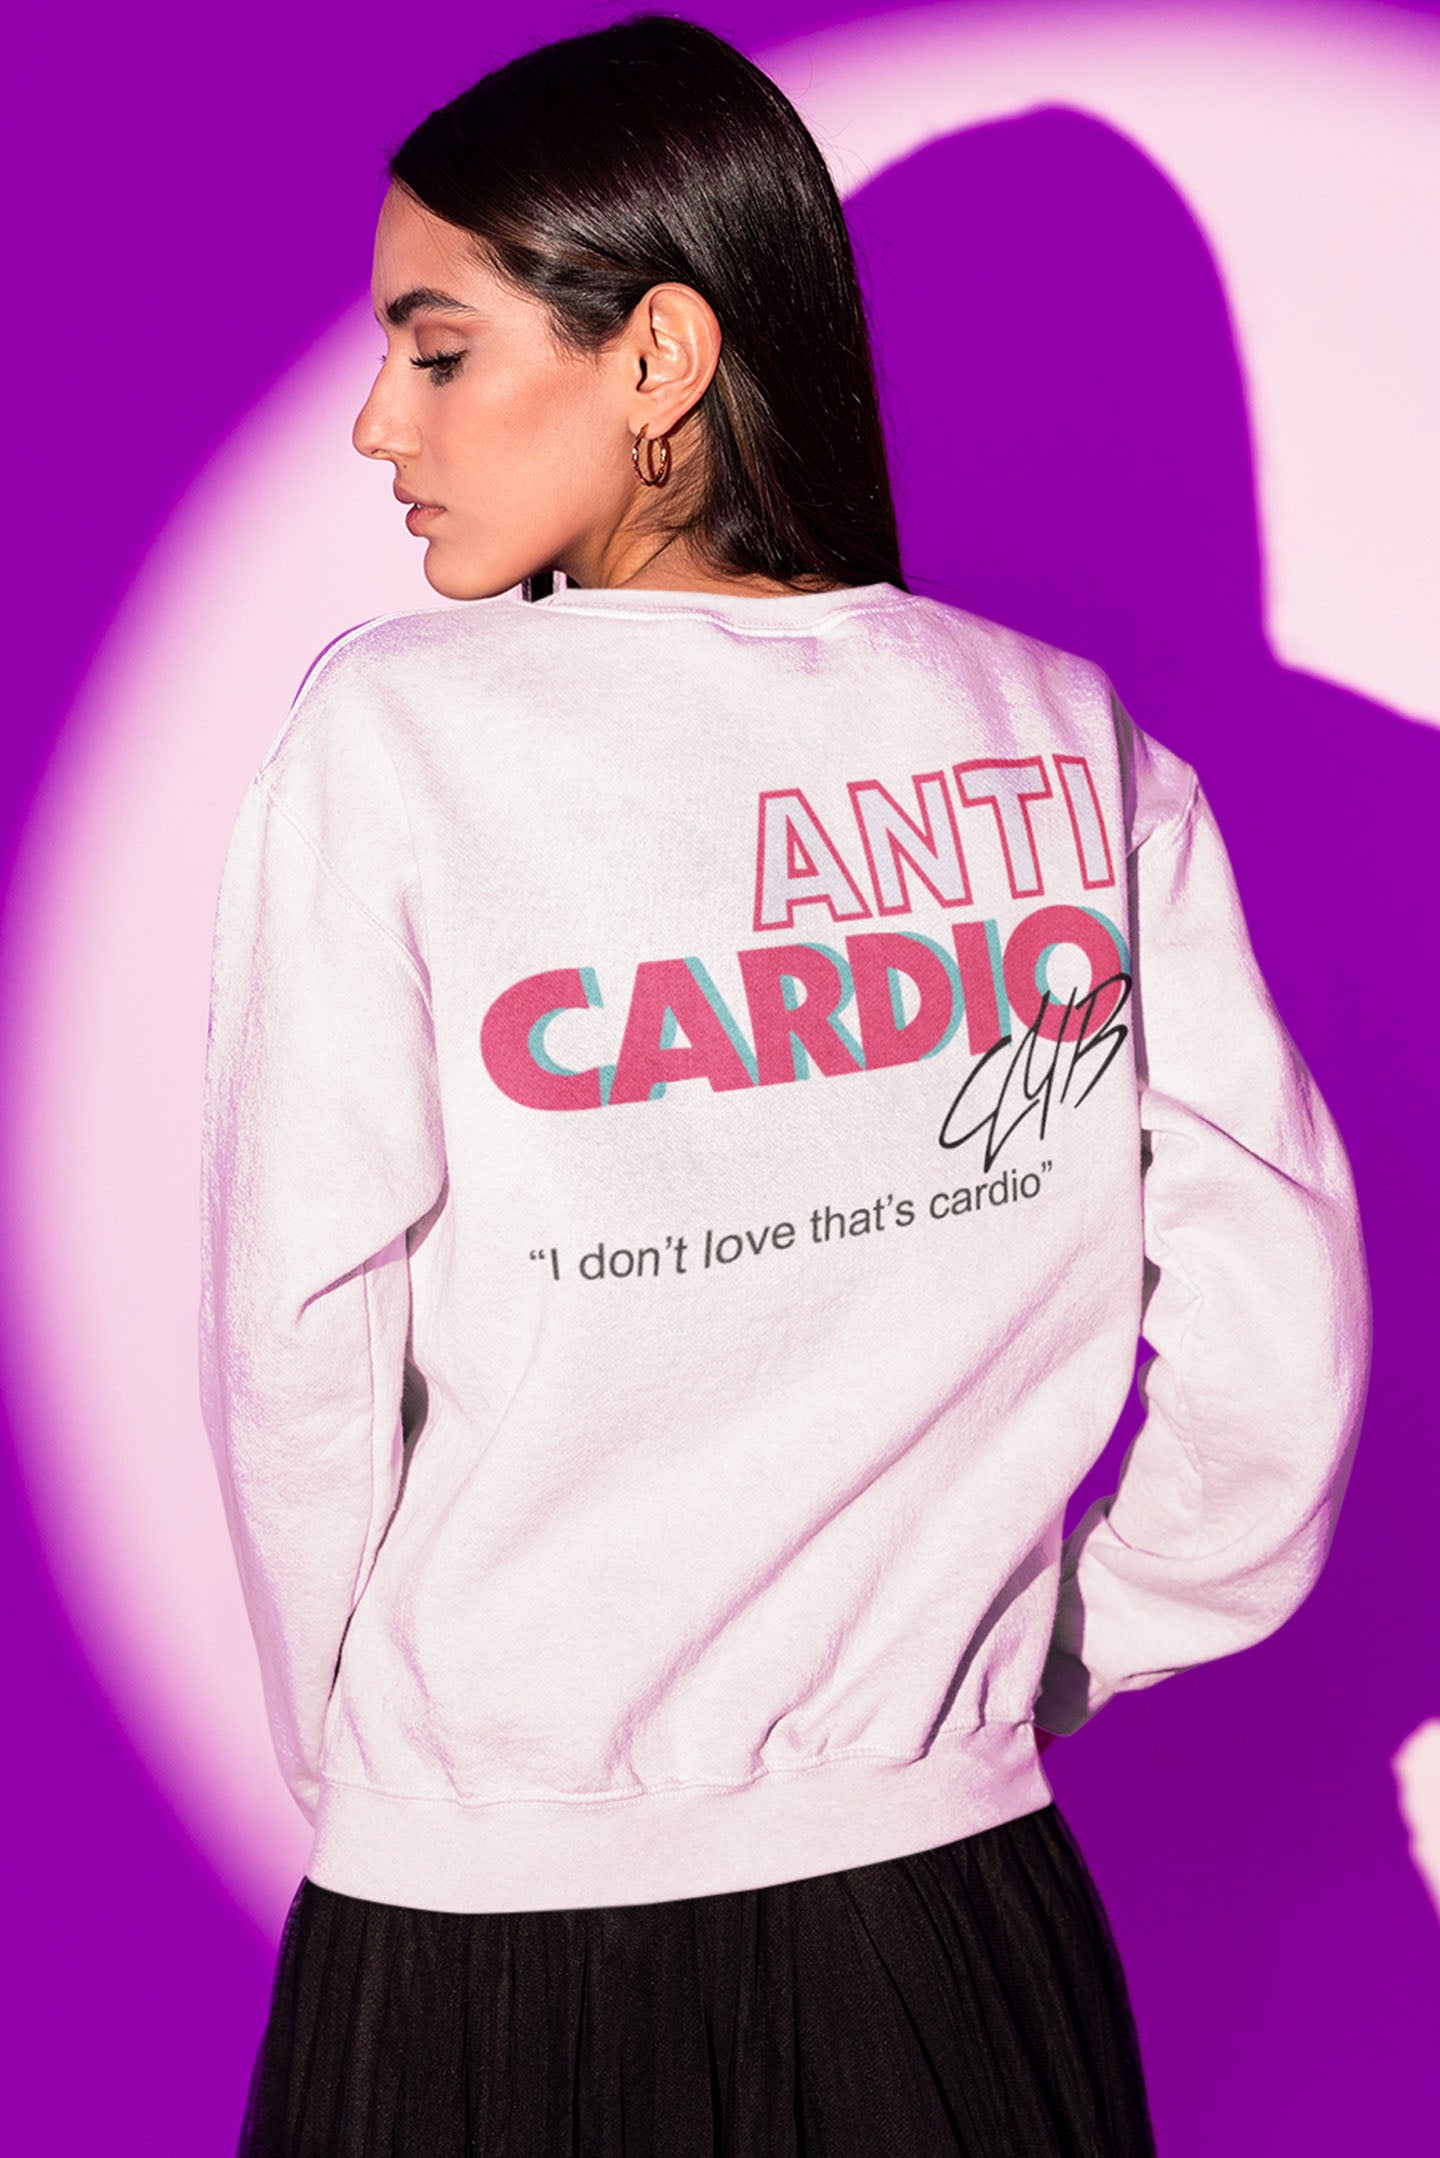 Anti Cardio Club Relaxed Fit Sweatshirt For Women